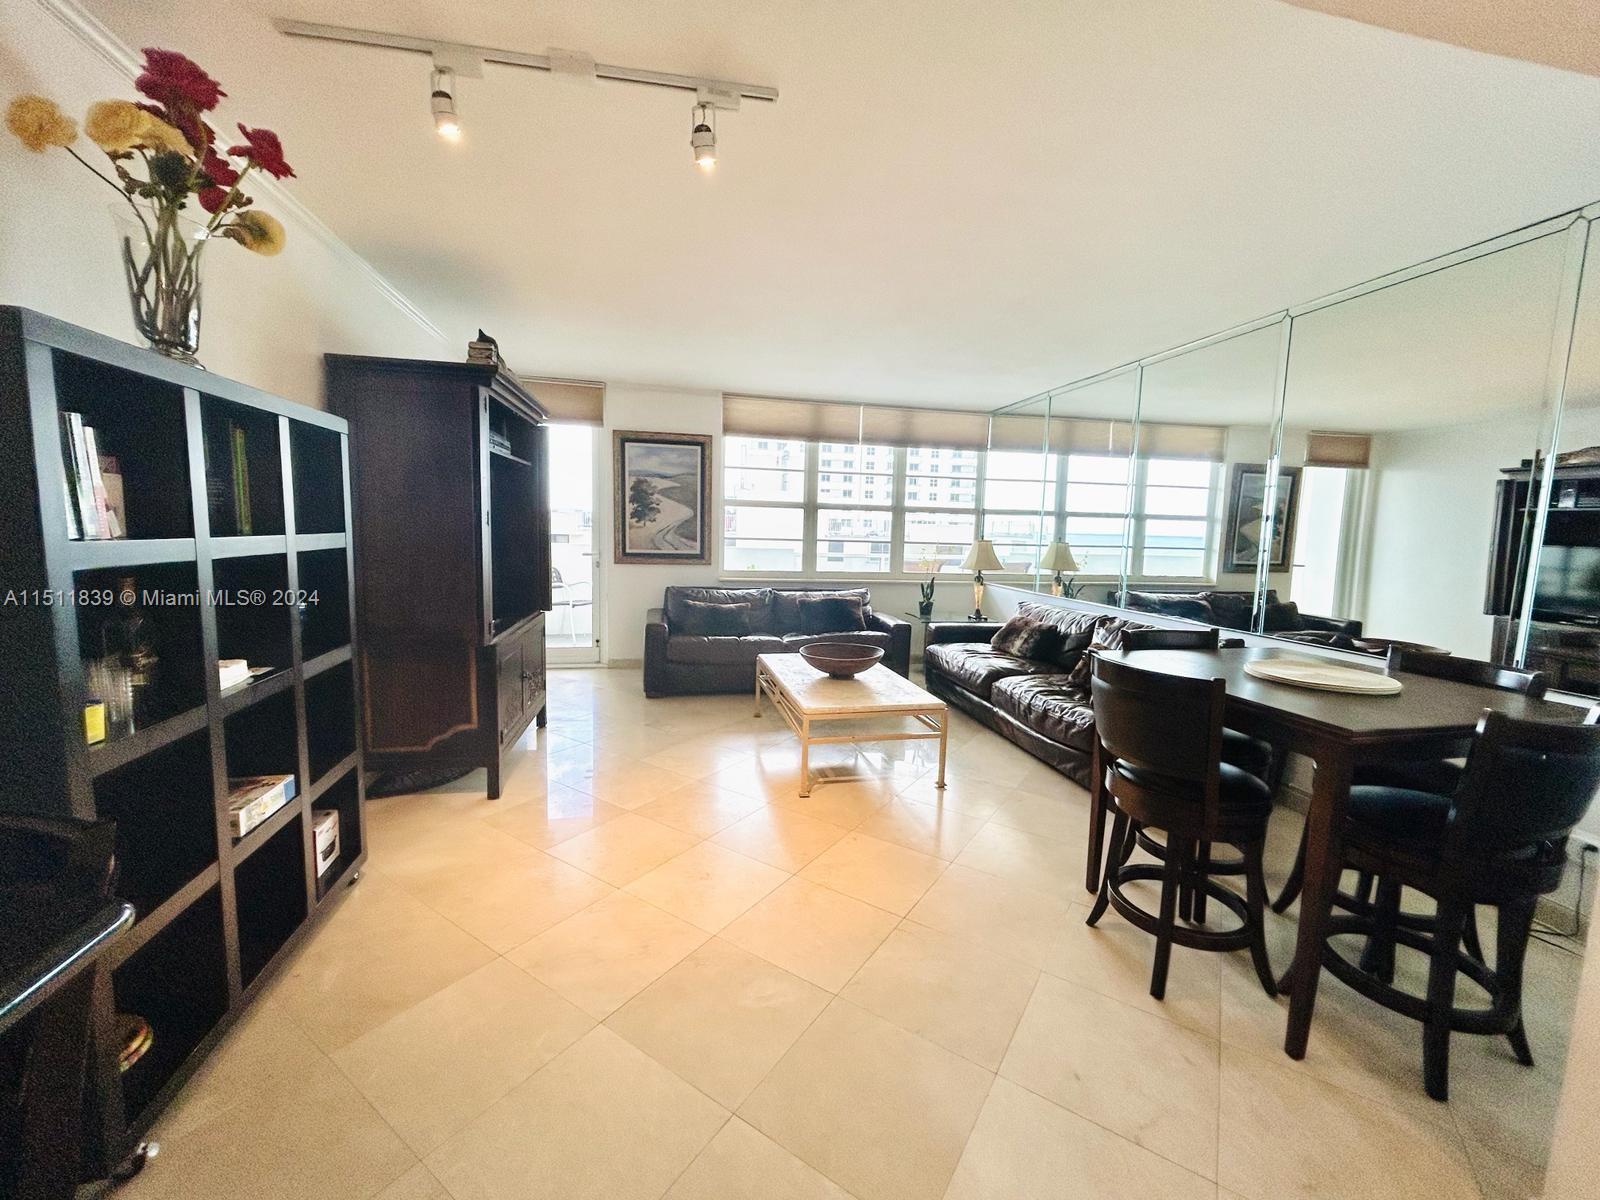 Property for Sale at 100 Lincoln Rd 1034, Miami Beach, Miami-Dade County, Florida - Bedrooms: 1 
Bathrooms: 1  - $685,000